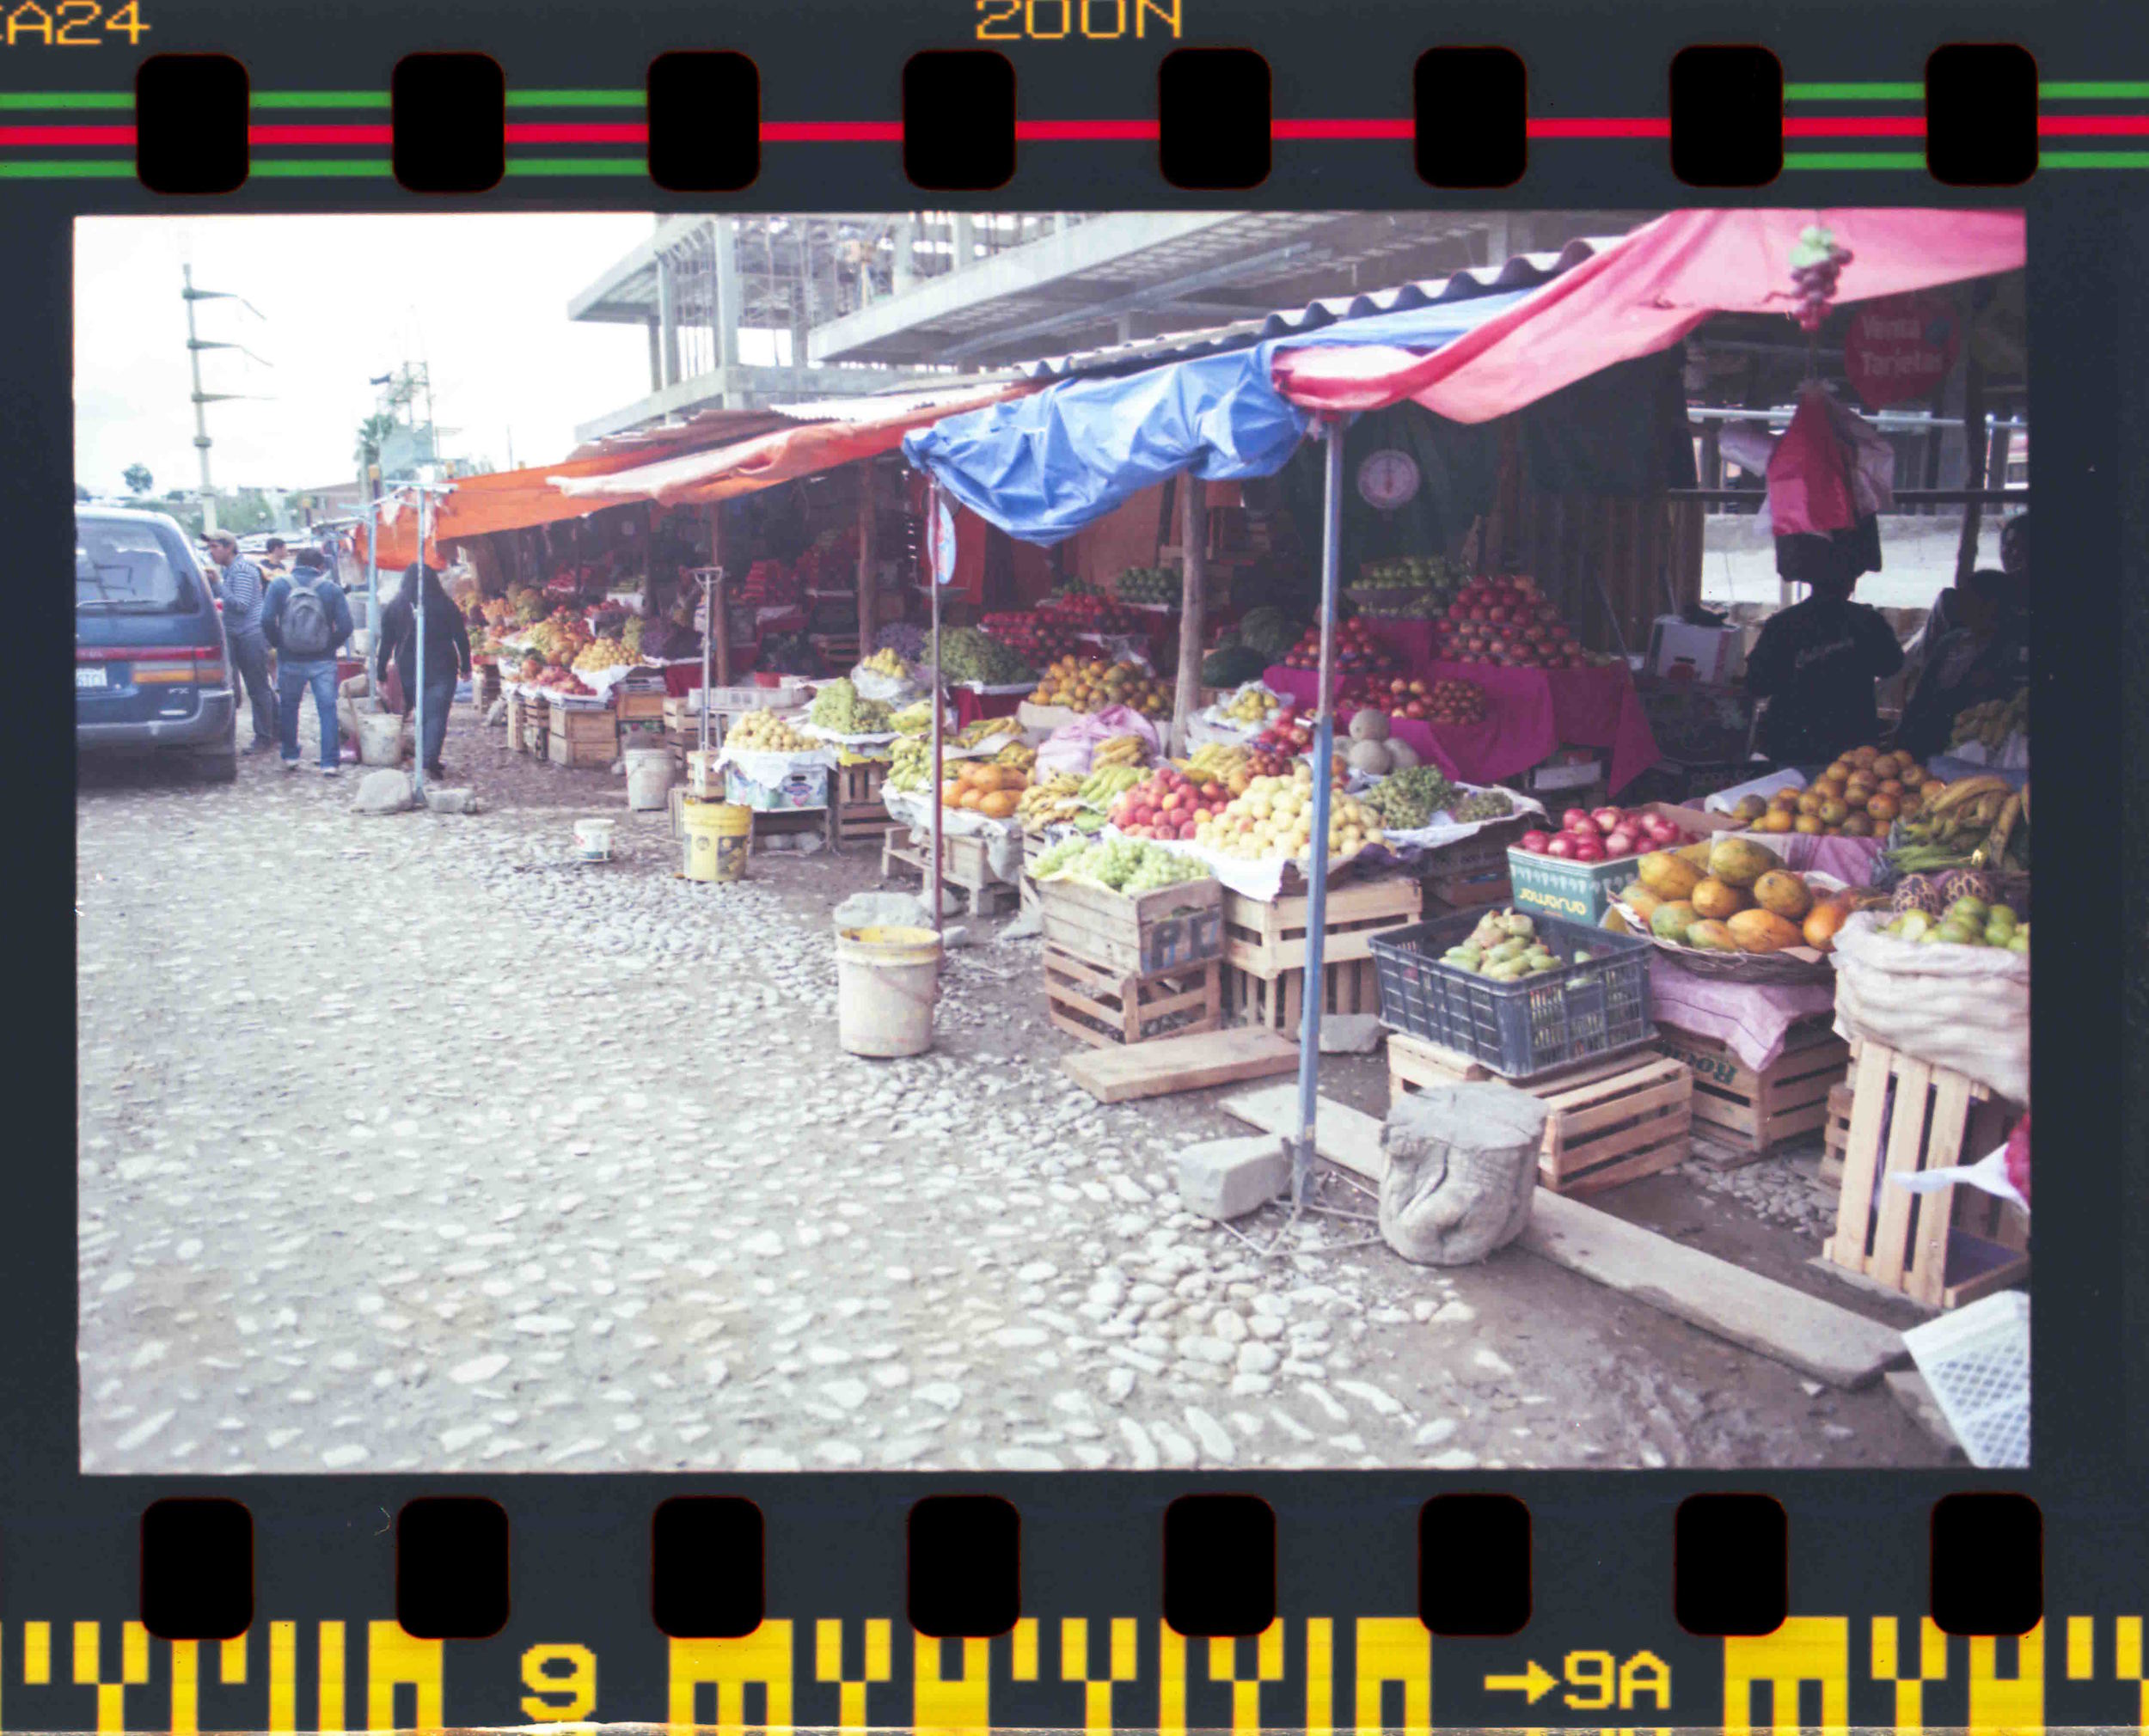  Open-air market in Cochabamba 